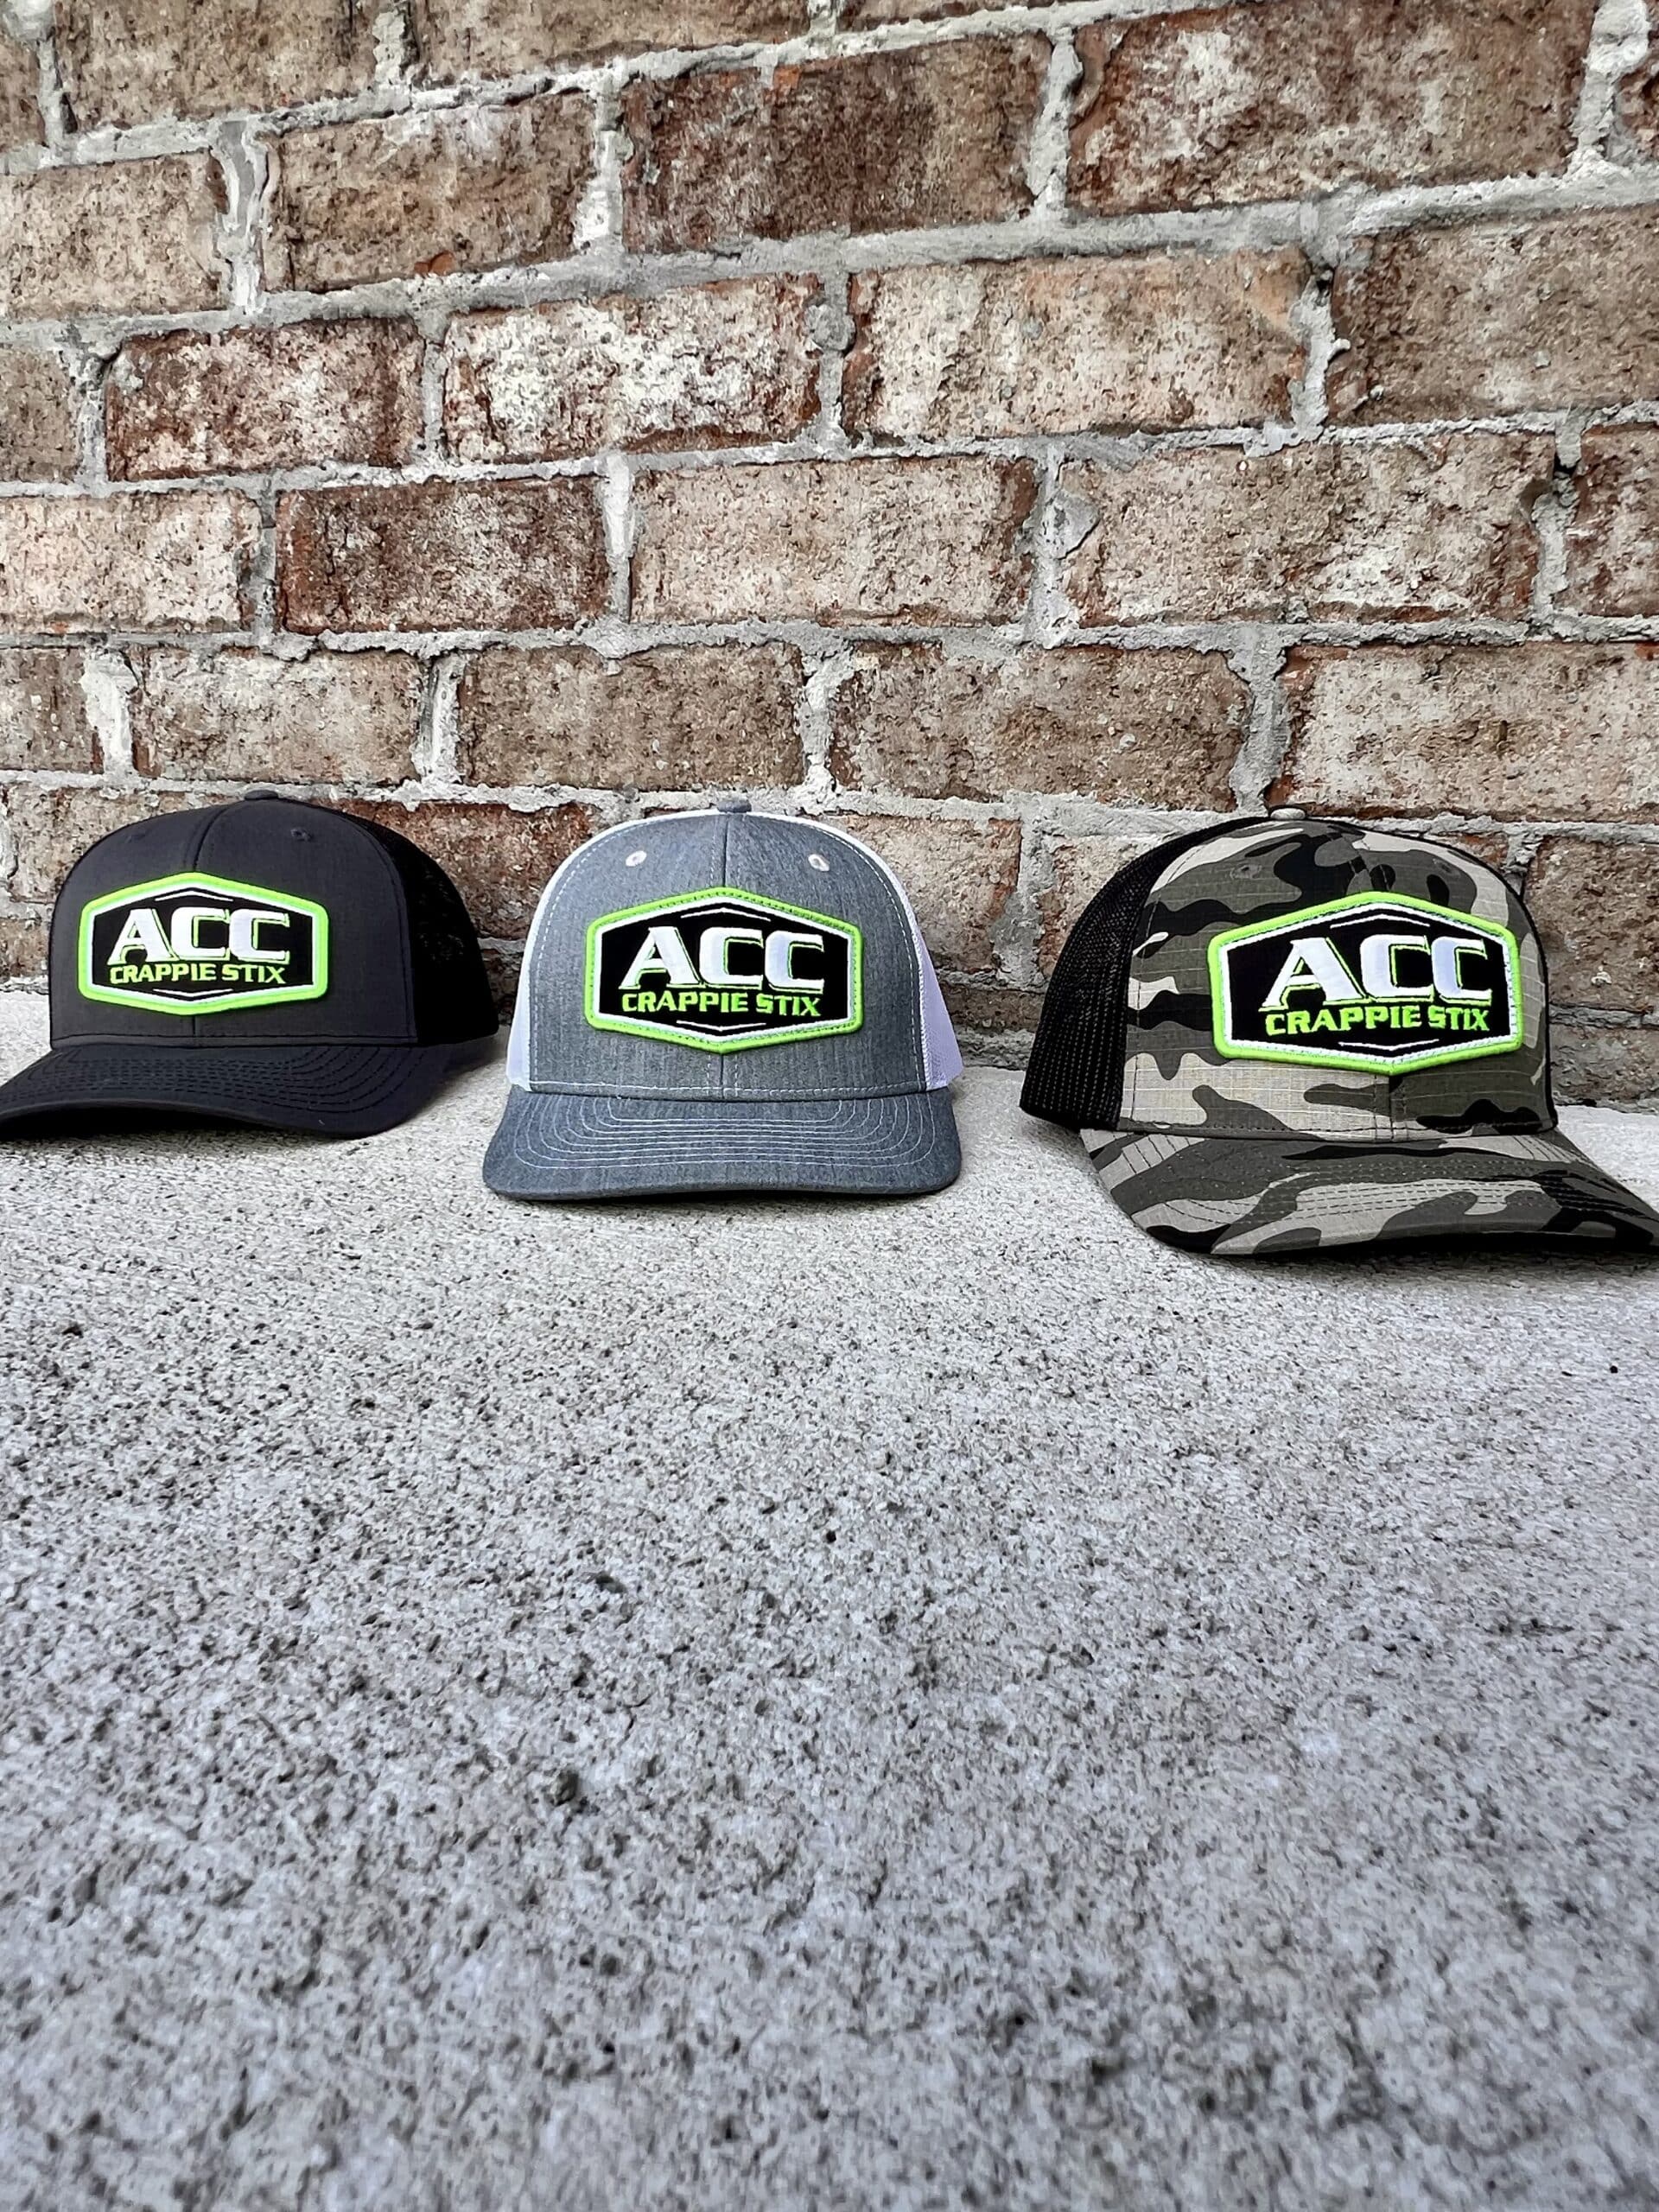 ACC Crappie Stix Logo Patch Hat